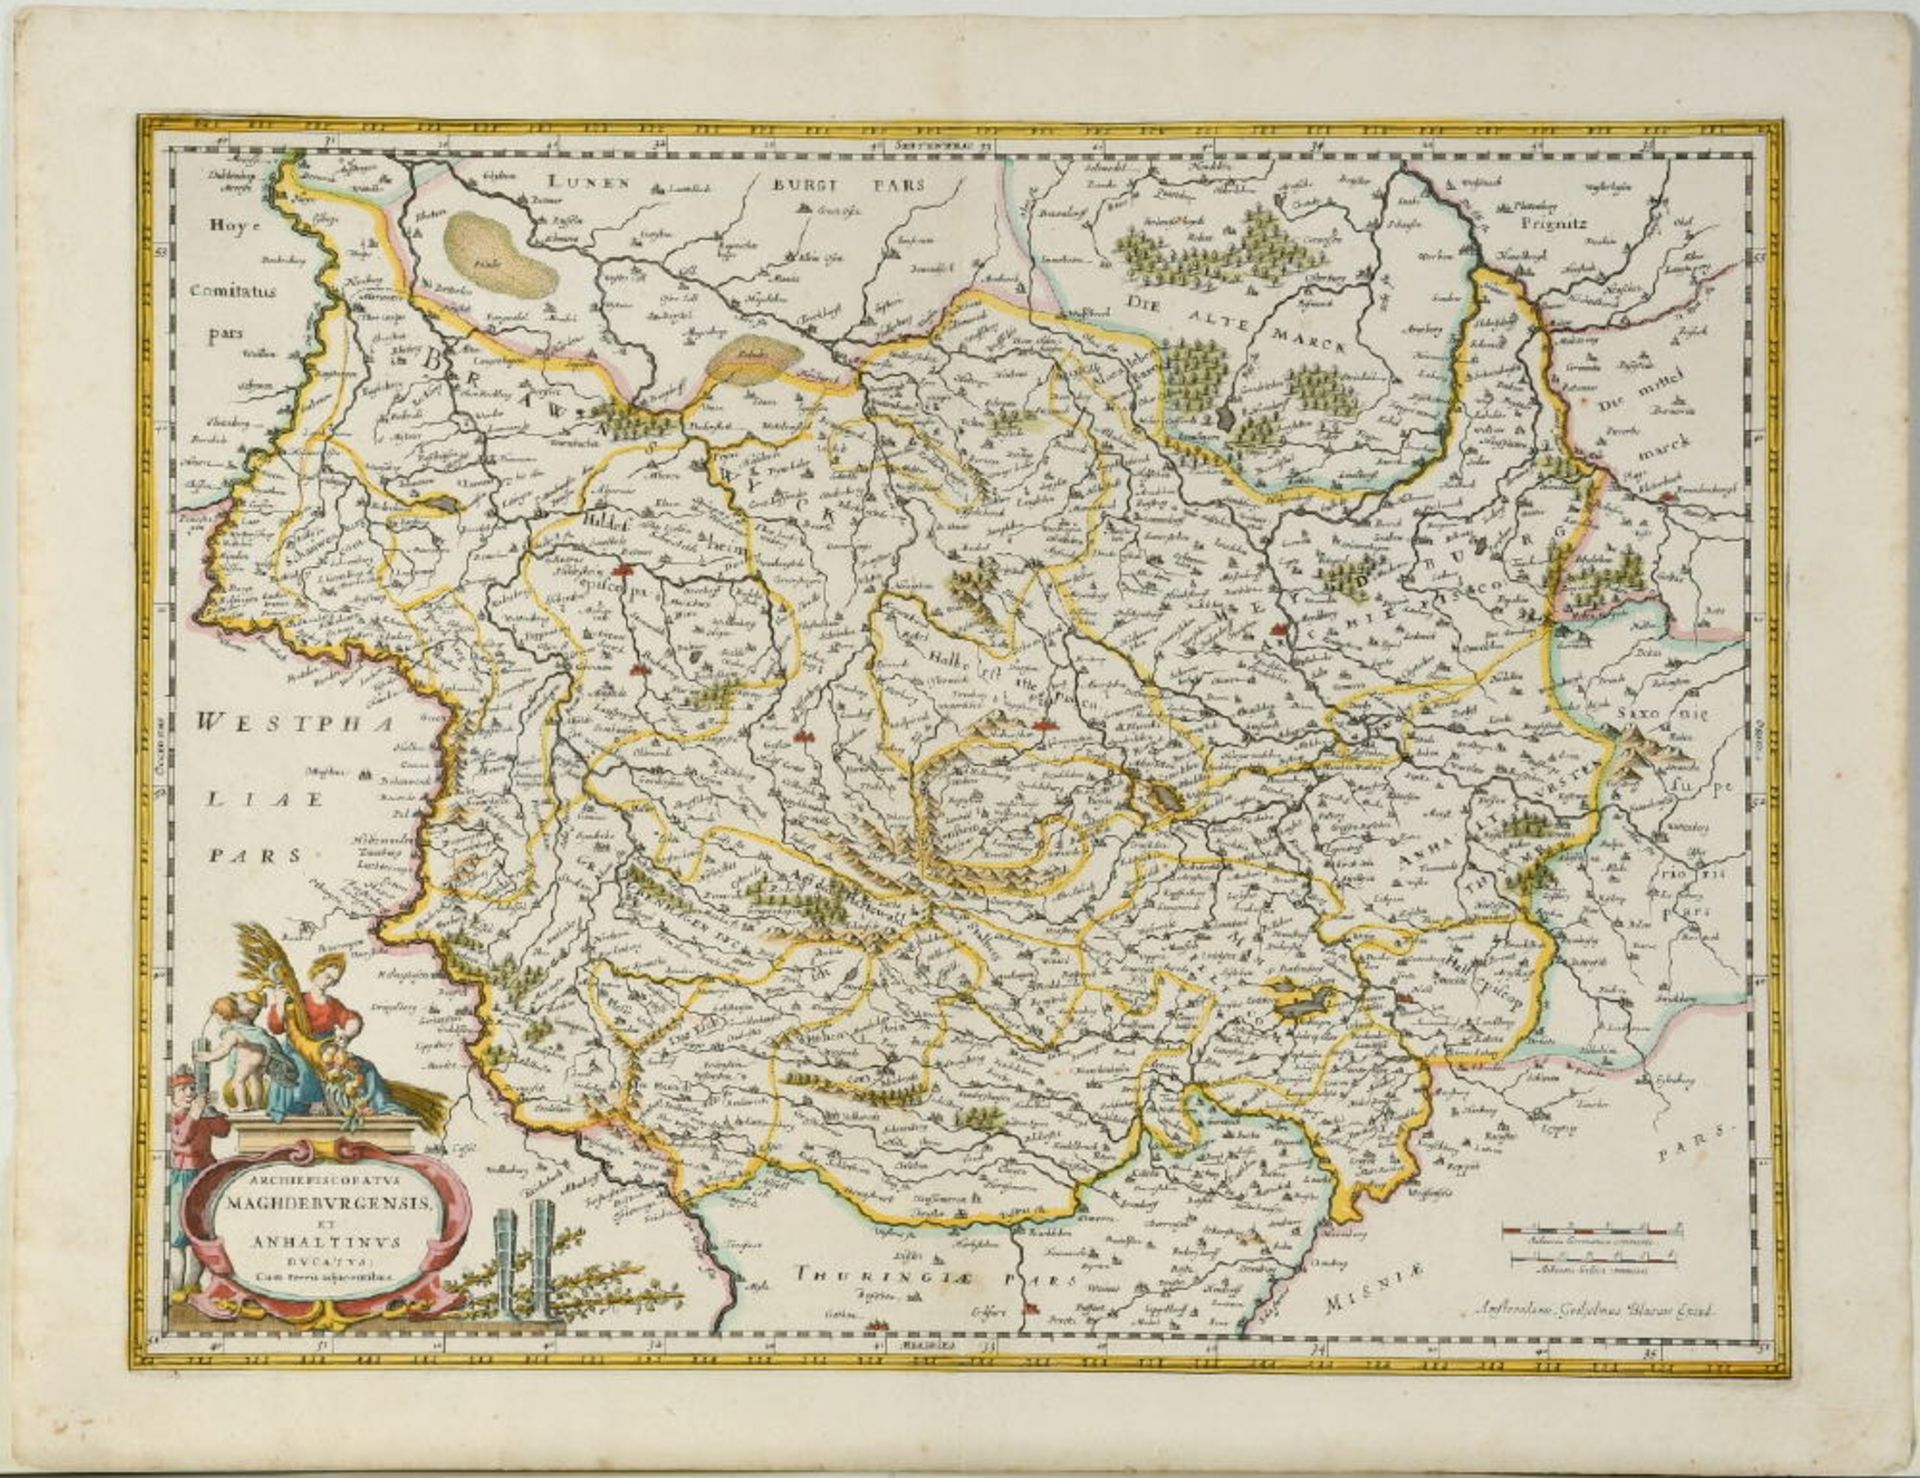 Landkarte "Archiepiscopatus Maghdeburgensis et Anhaltinus"